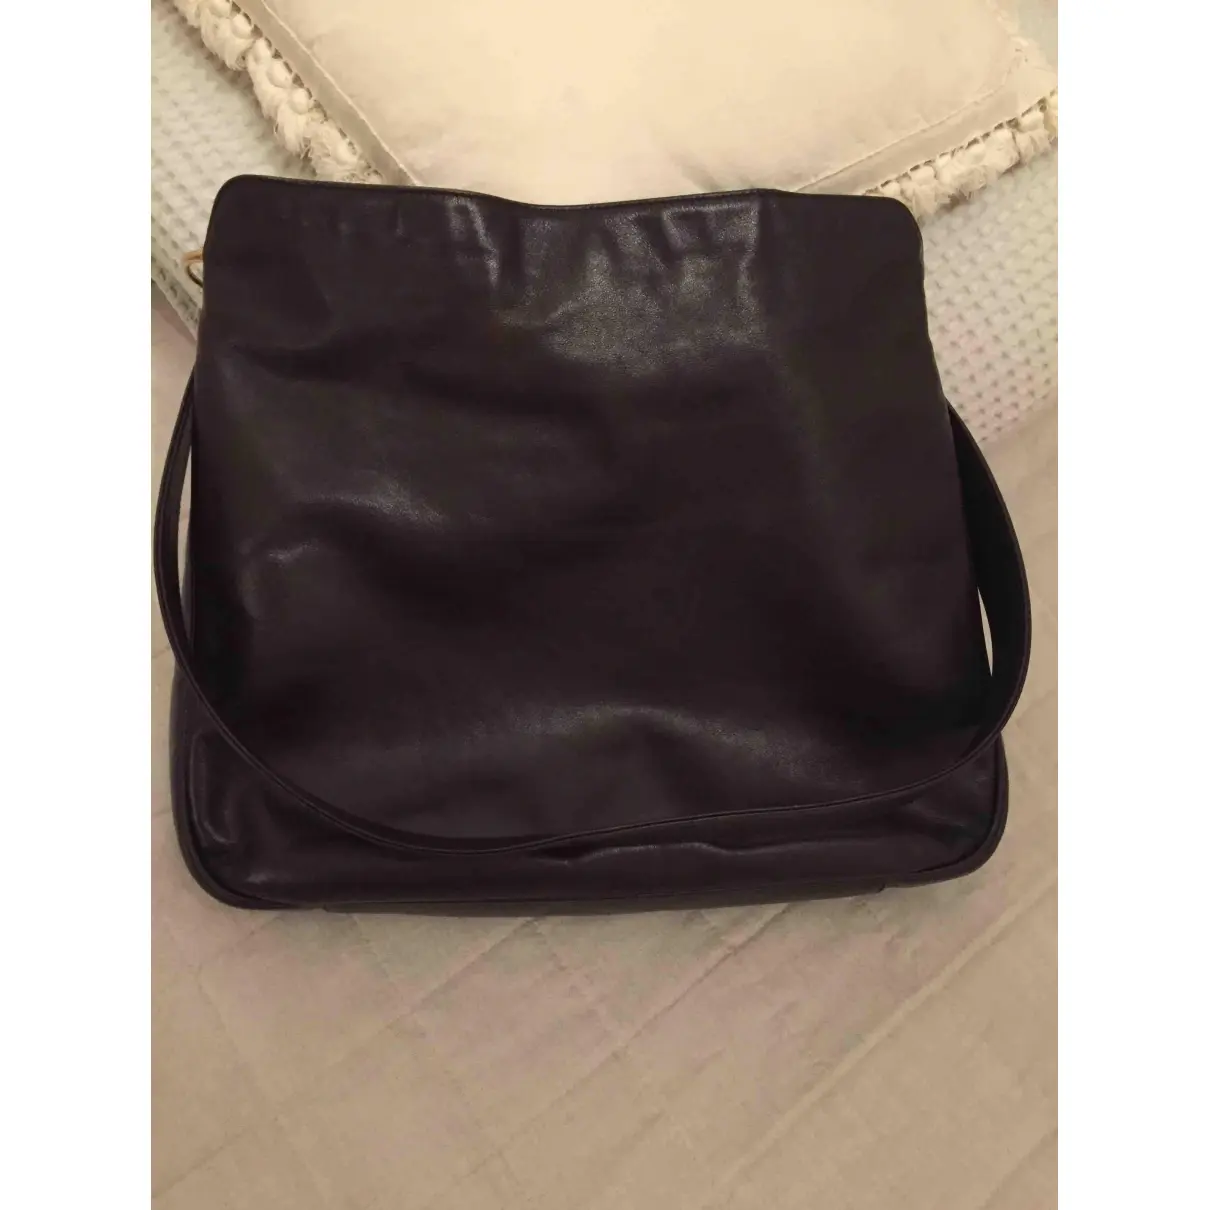 Buy Gucci Bamboo Top Handle leather handbag online - Vintage